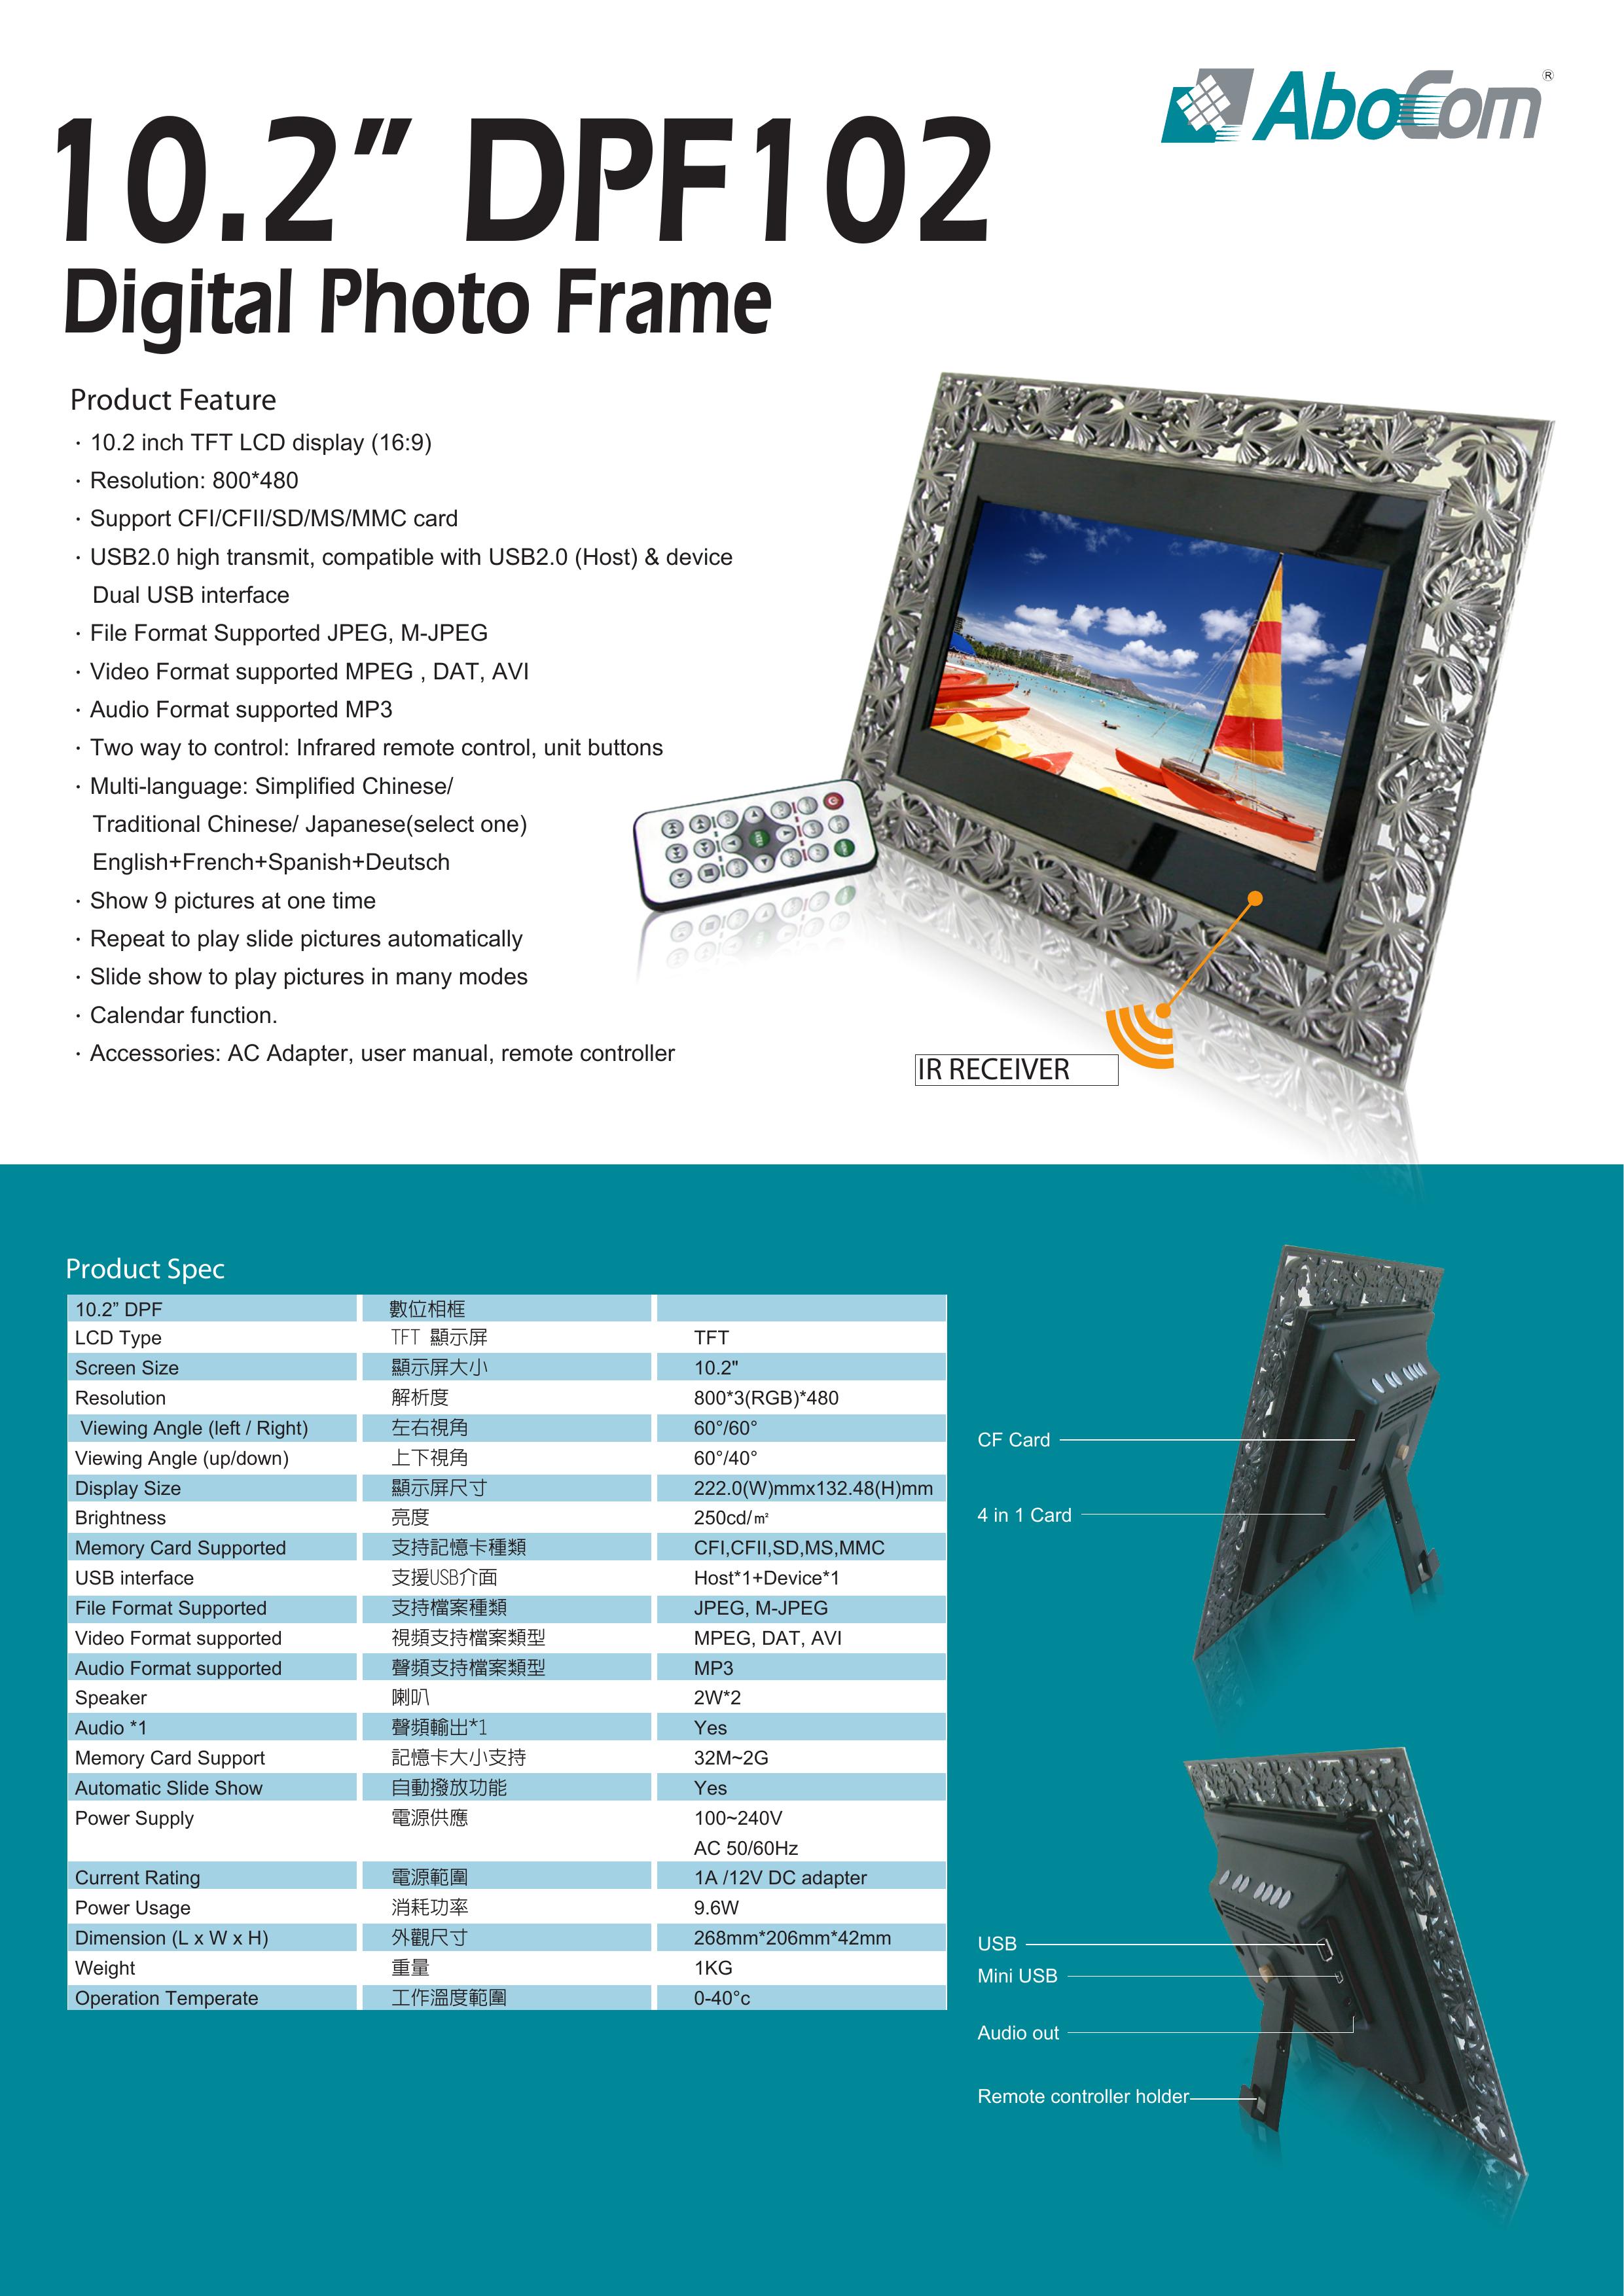 Abocom DPF102 Digital Photo Frame User Manual